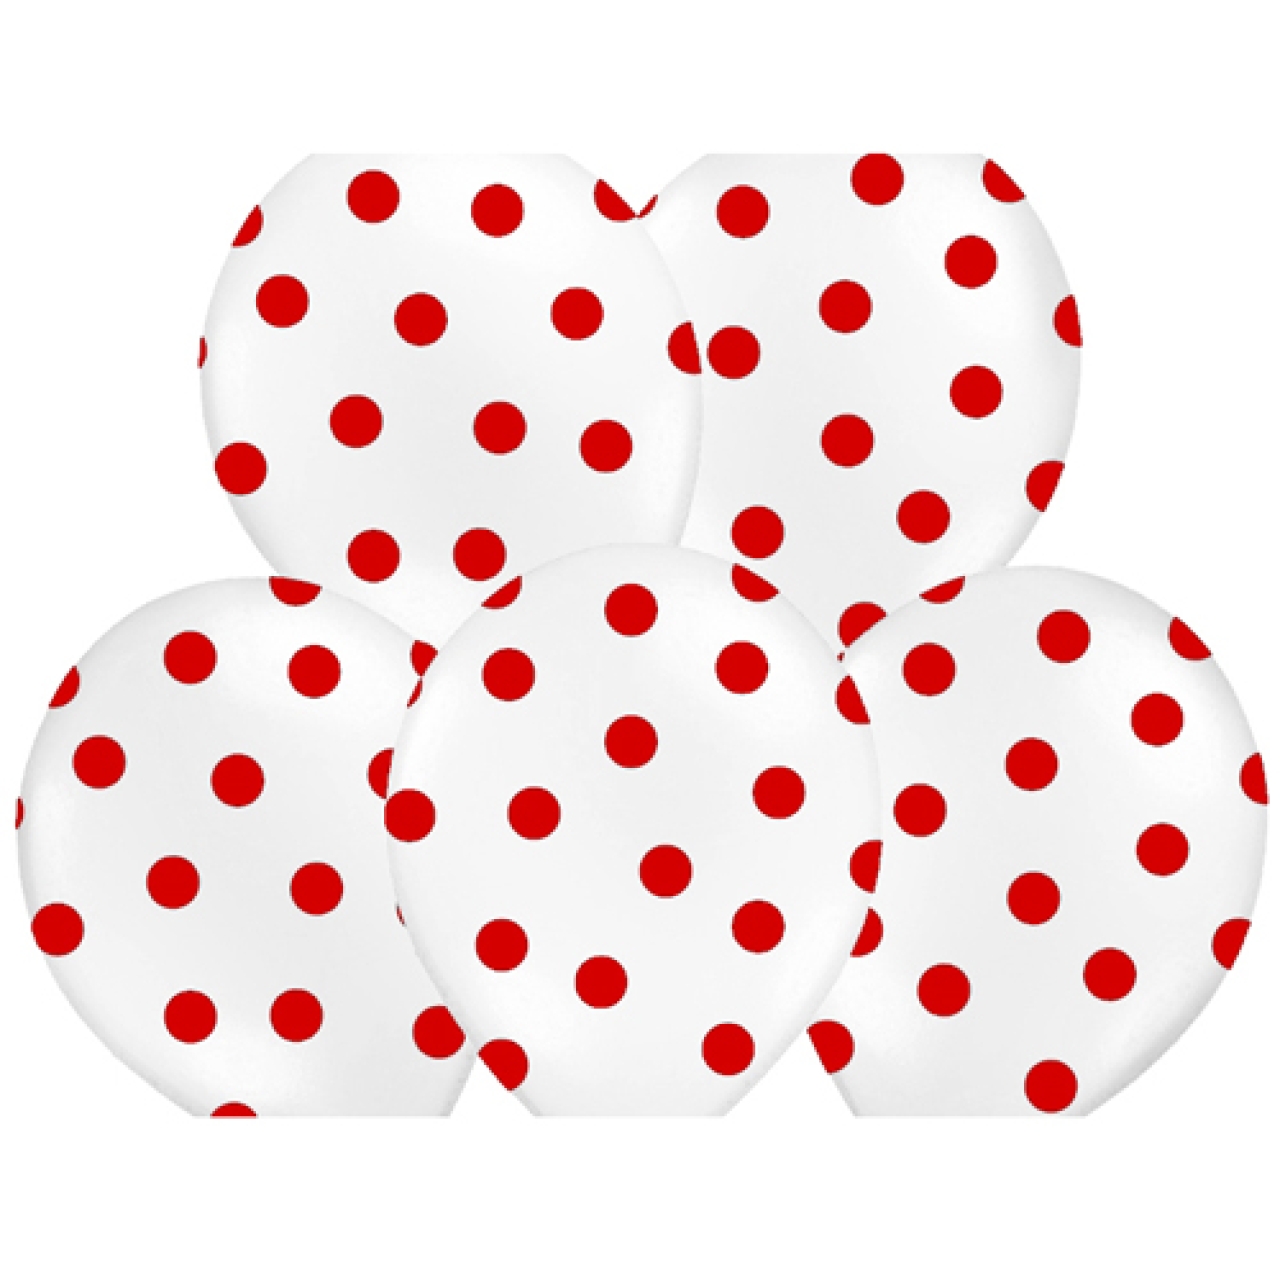 Luftballons "Rote Punkte", 6 Stück, 30 cm